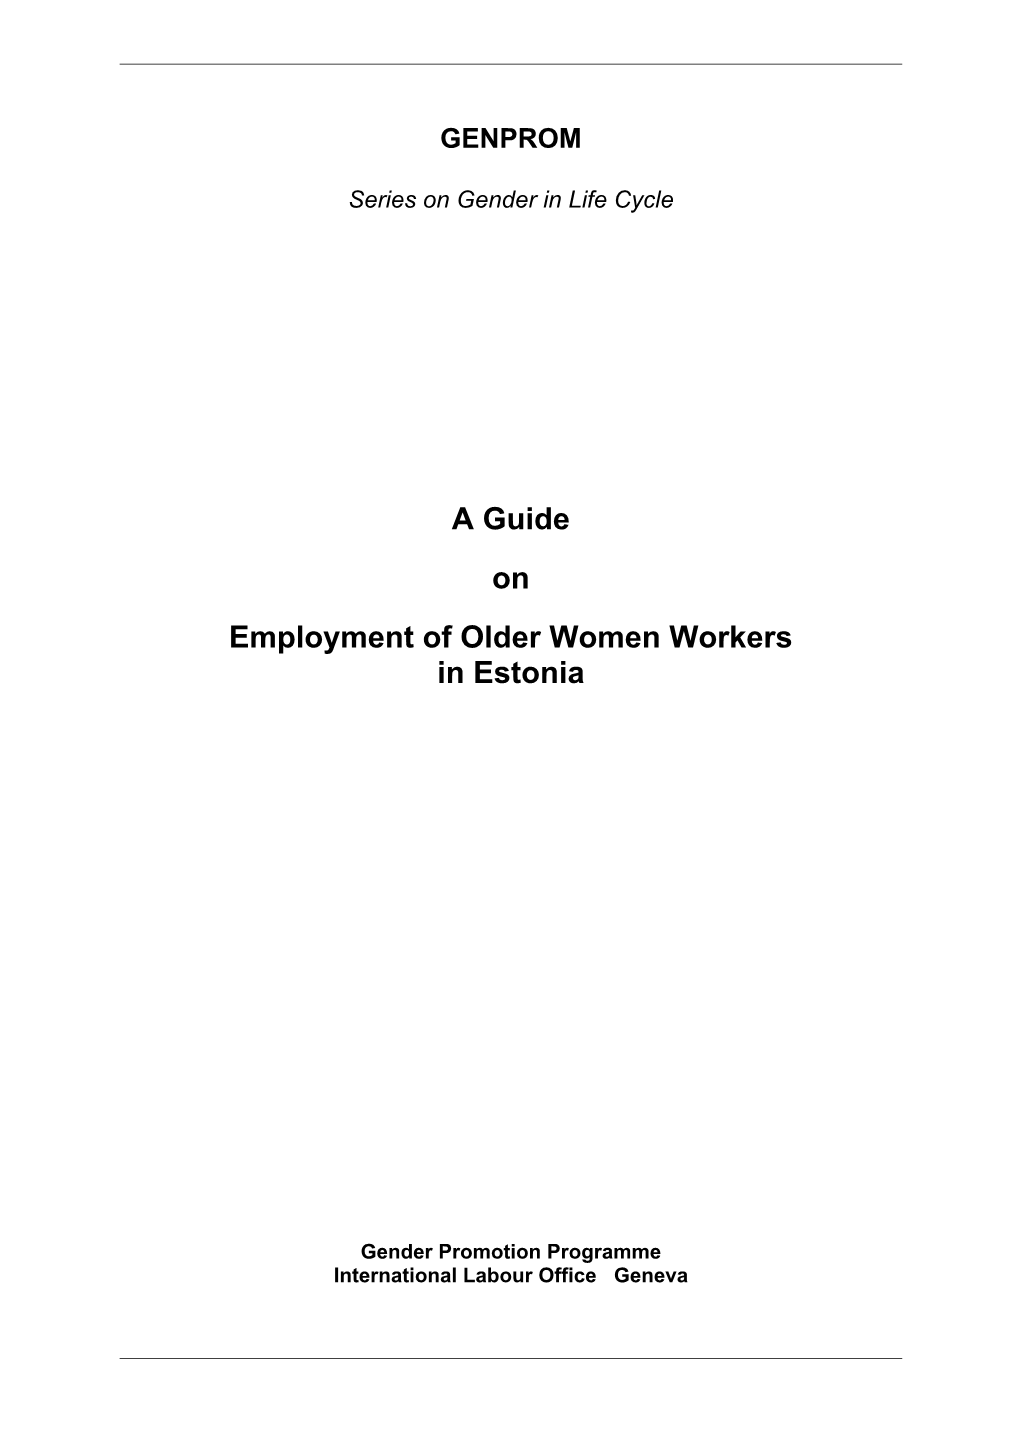 A Guide on Employment of Older Women Workers in Estoniapdf